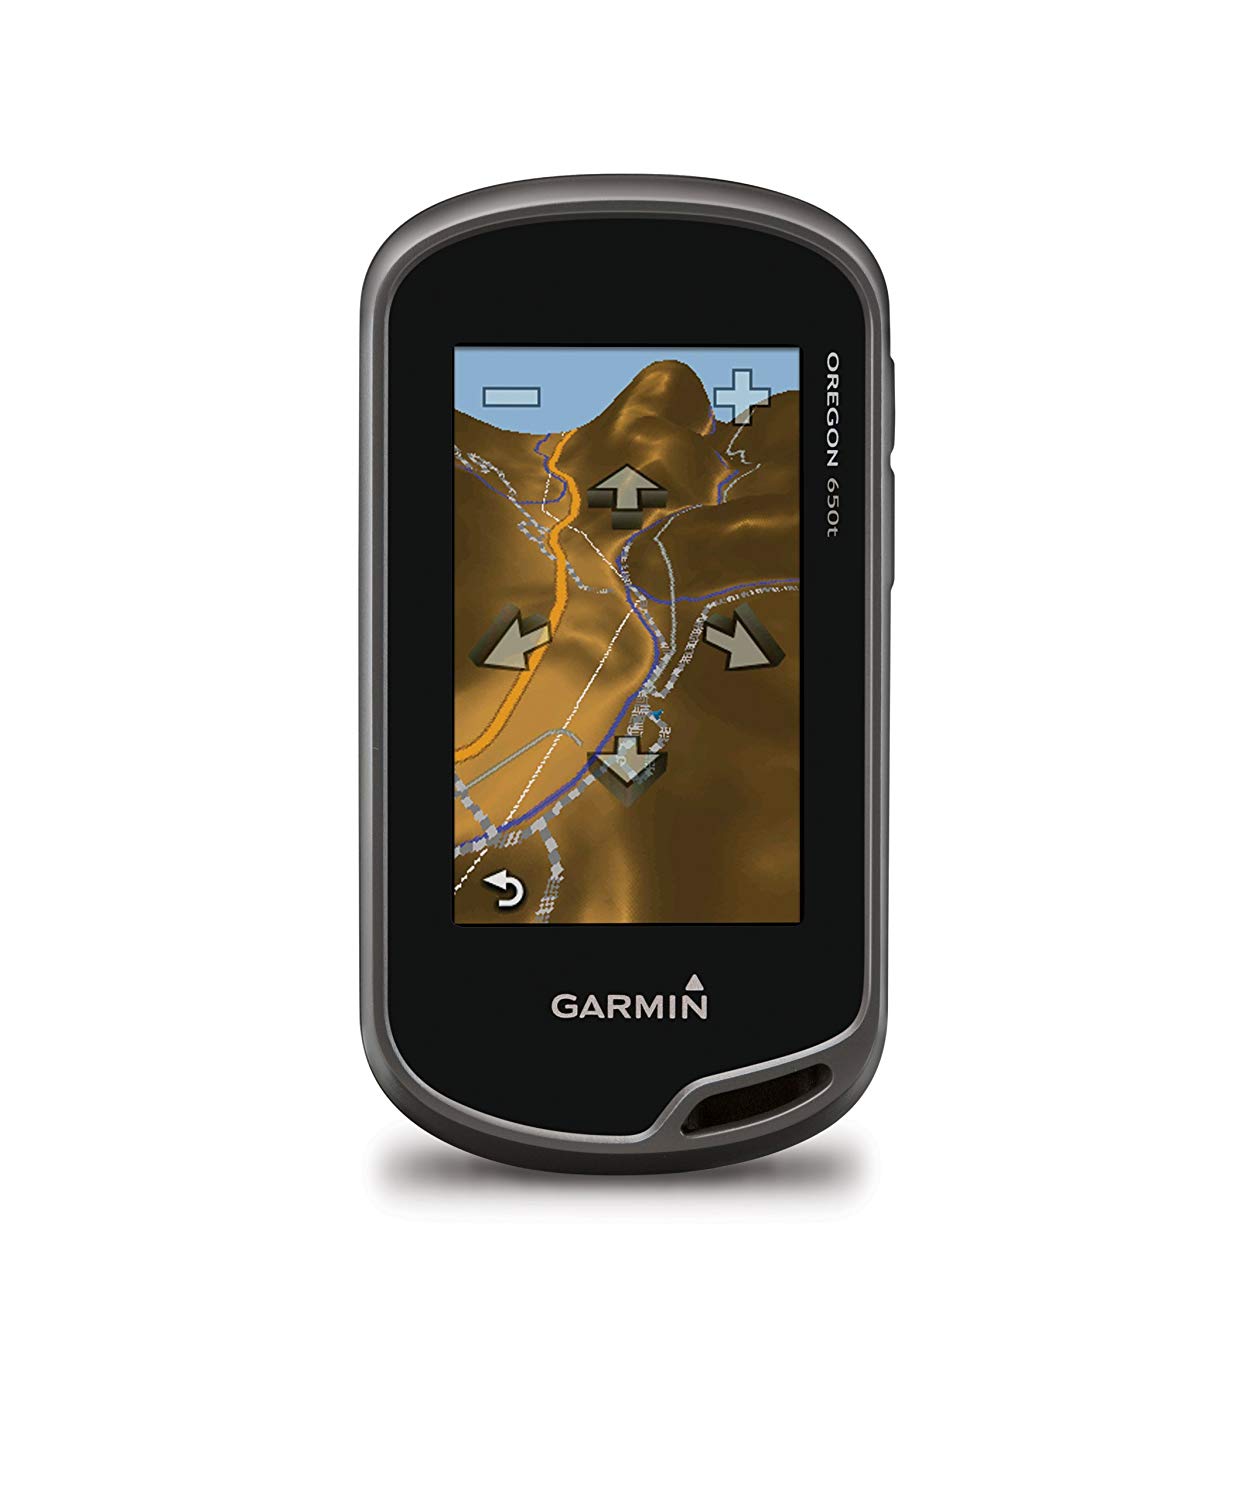 GARMIN OREGON 550T 3-INCH HANDHELD GPS NAVIGATOR